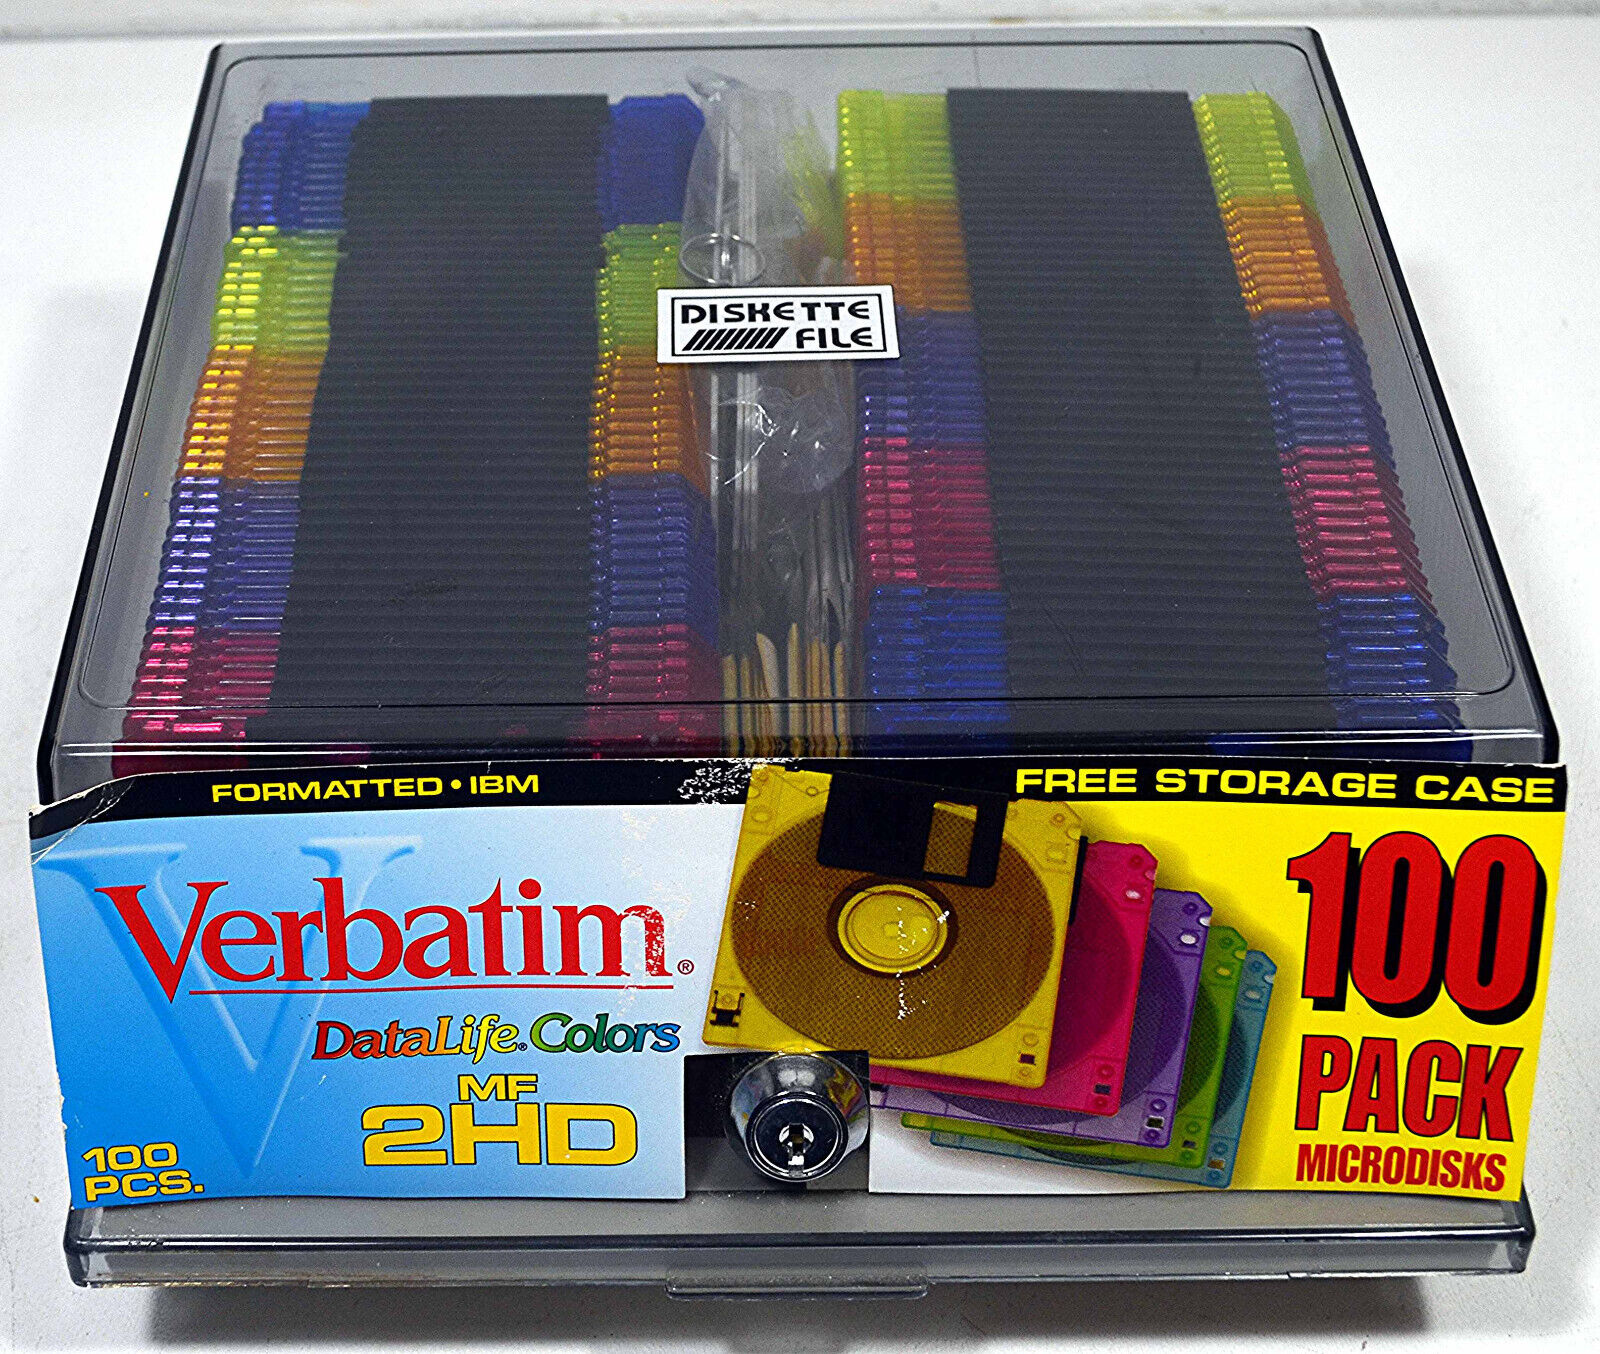 Verbatim DataLife Colors MF 2HD 100 Pack w/Case & Keys